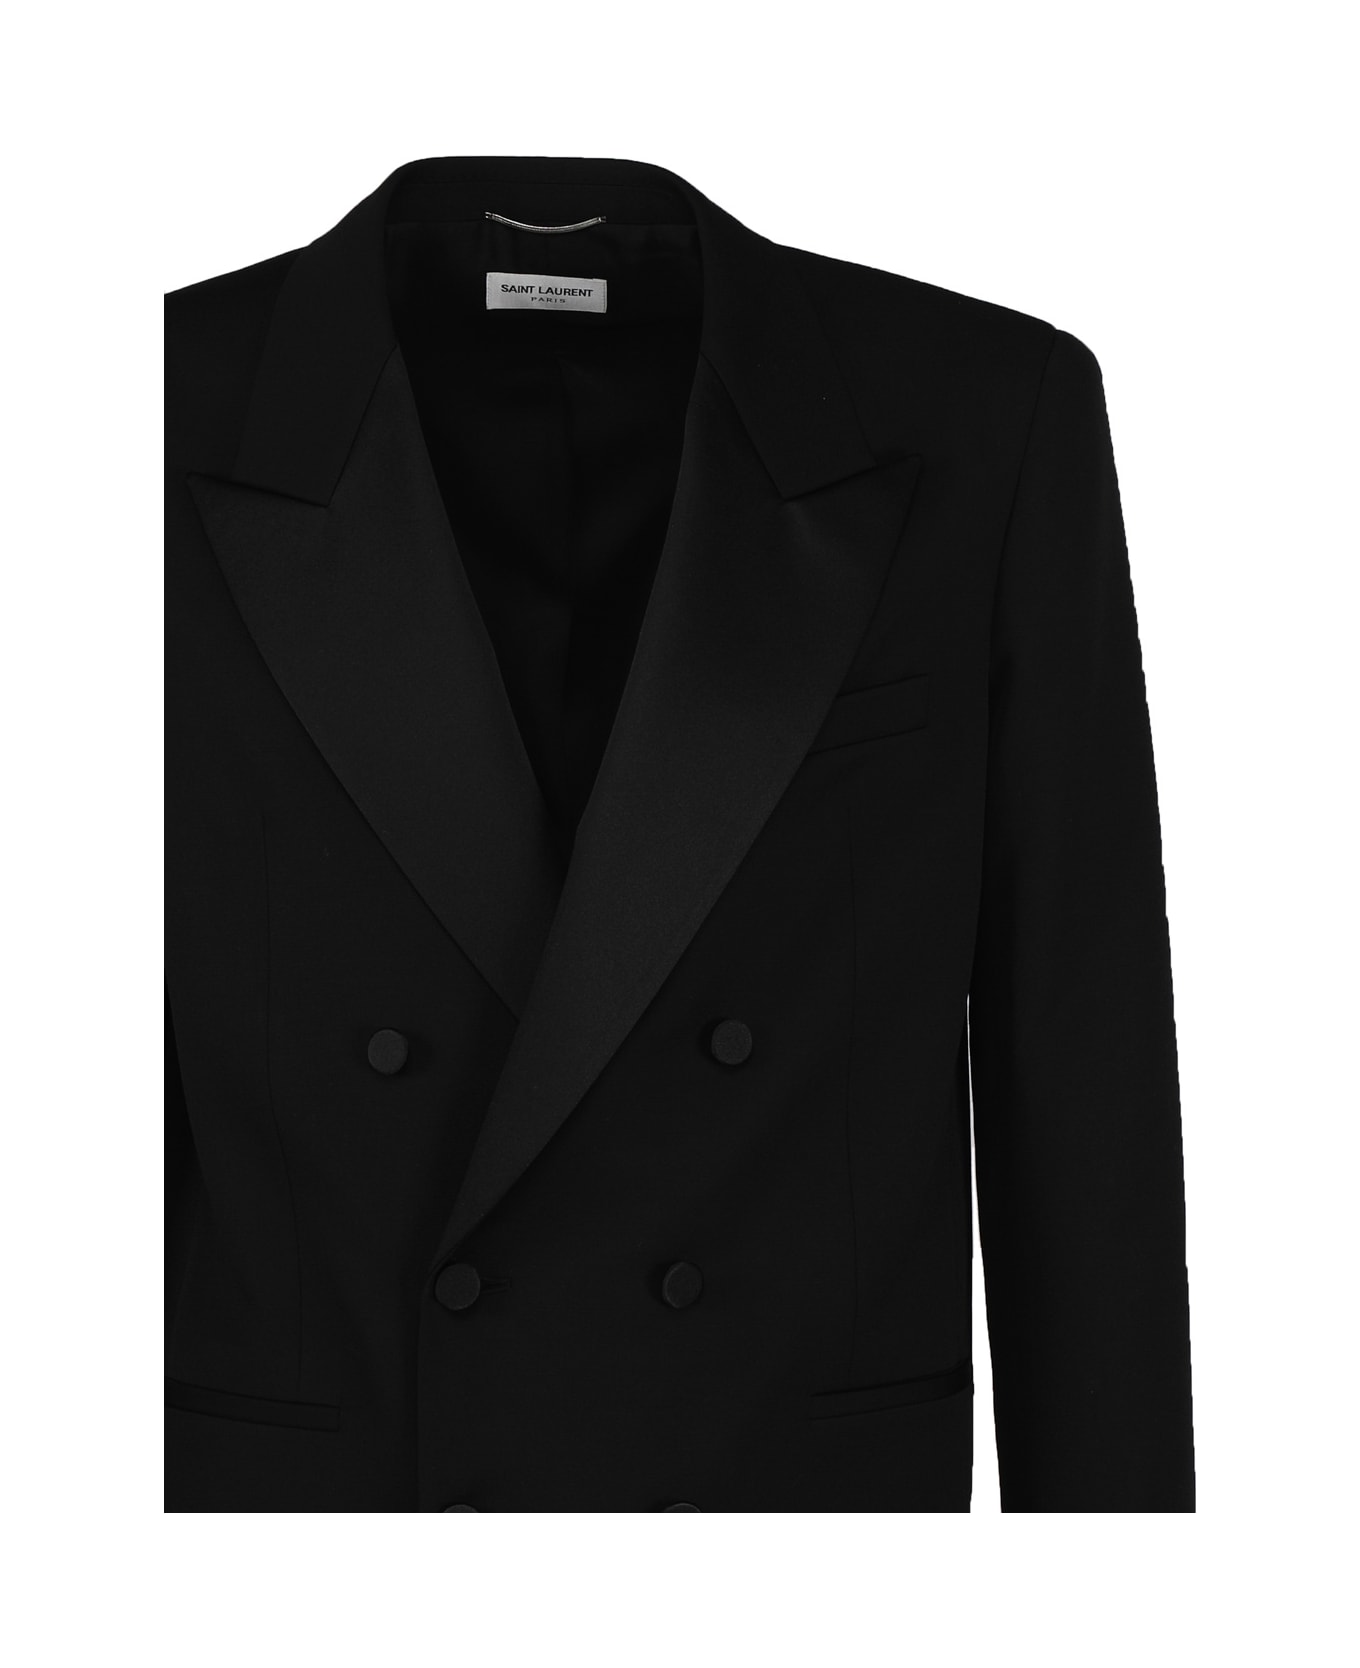 Saint Laurent Double-breasted Jacket - Black